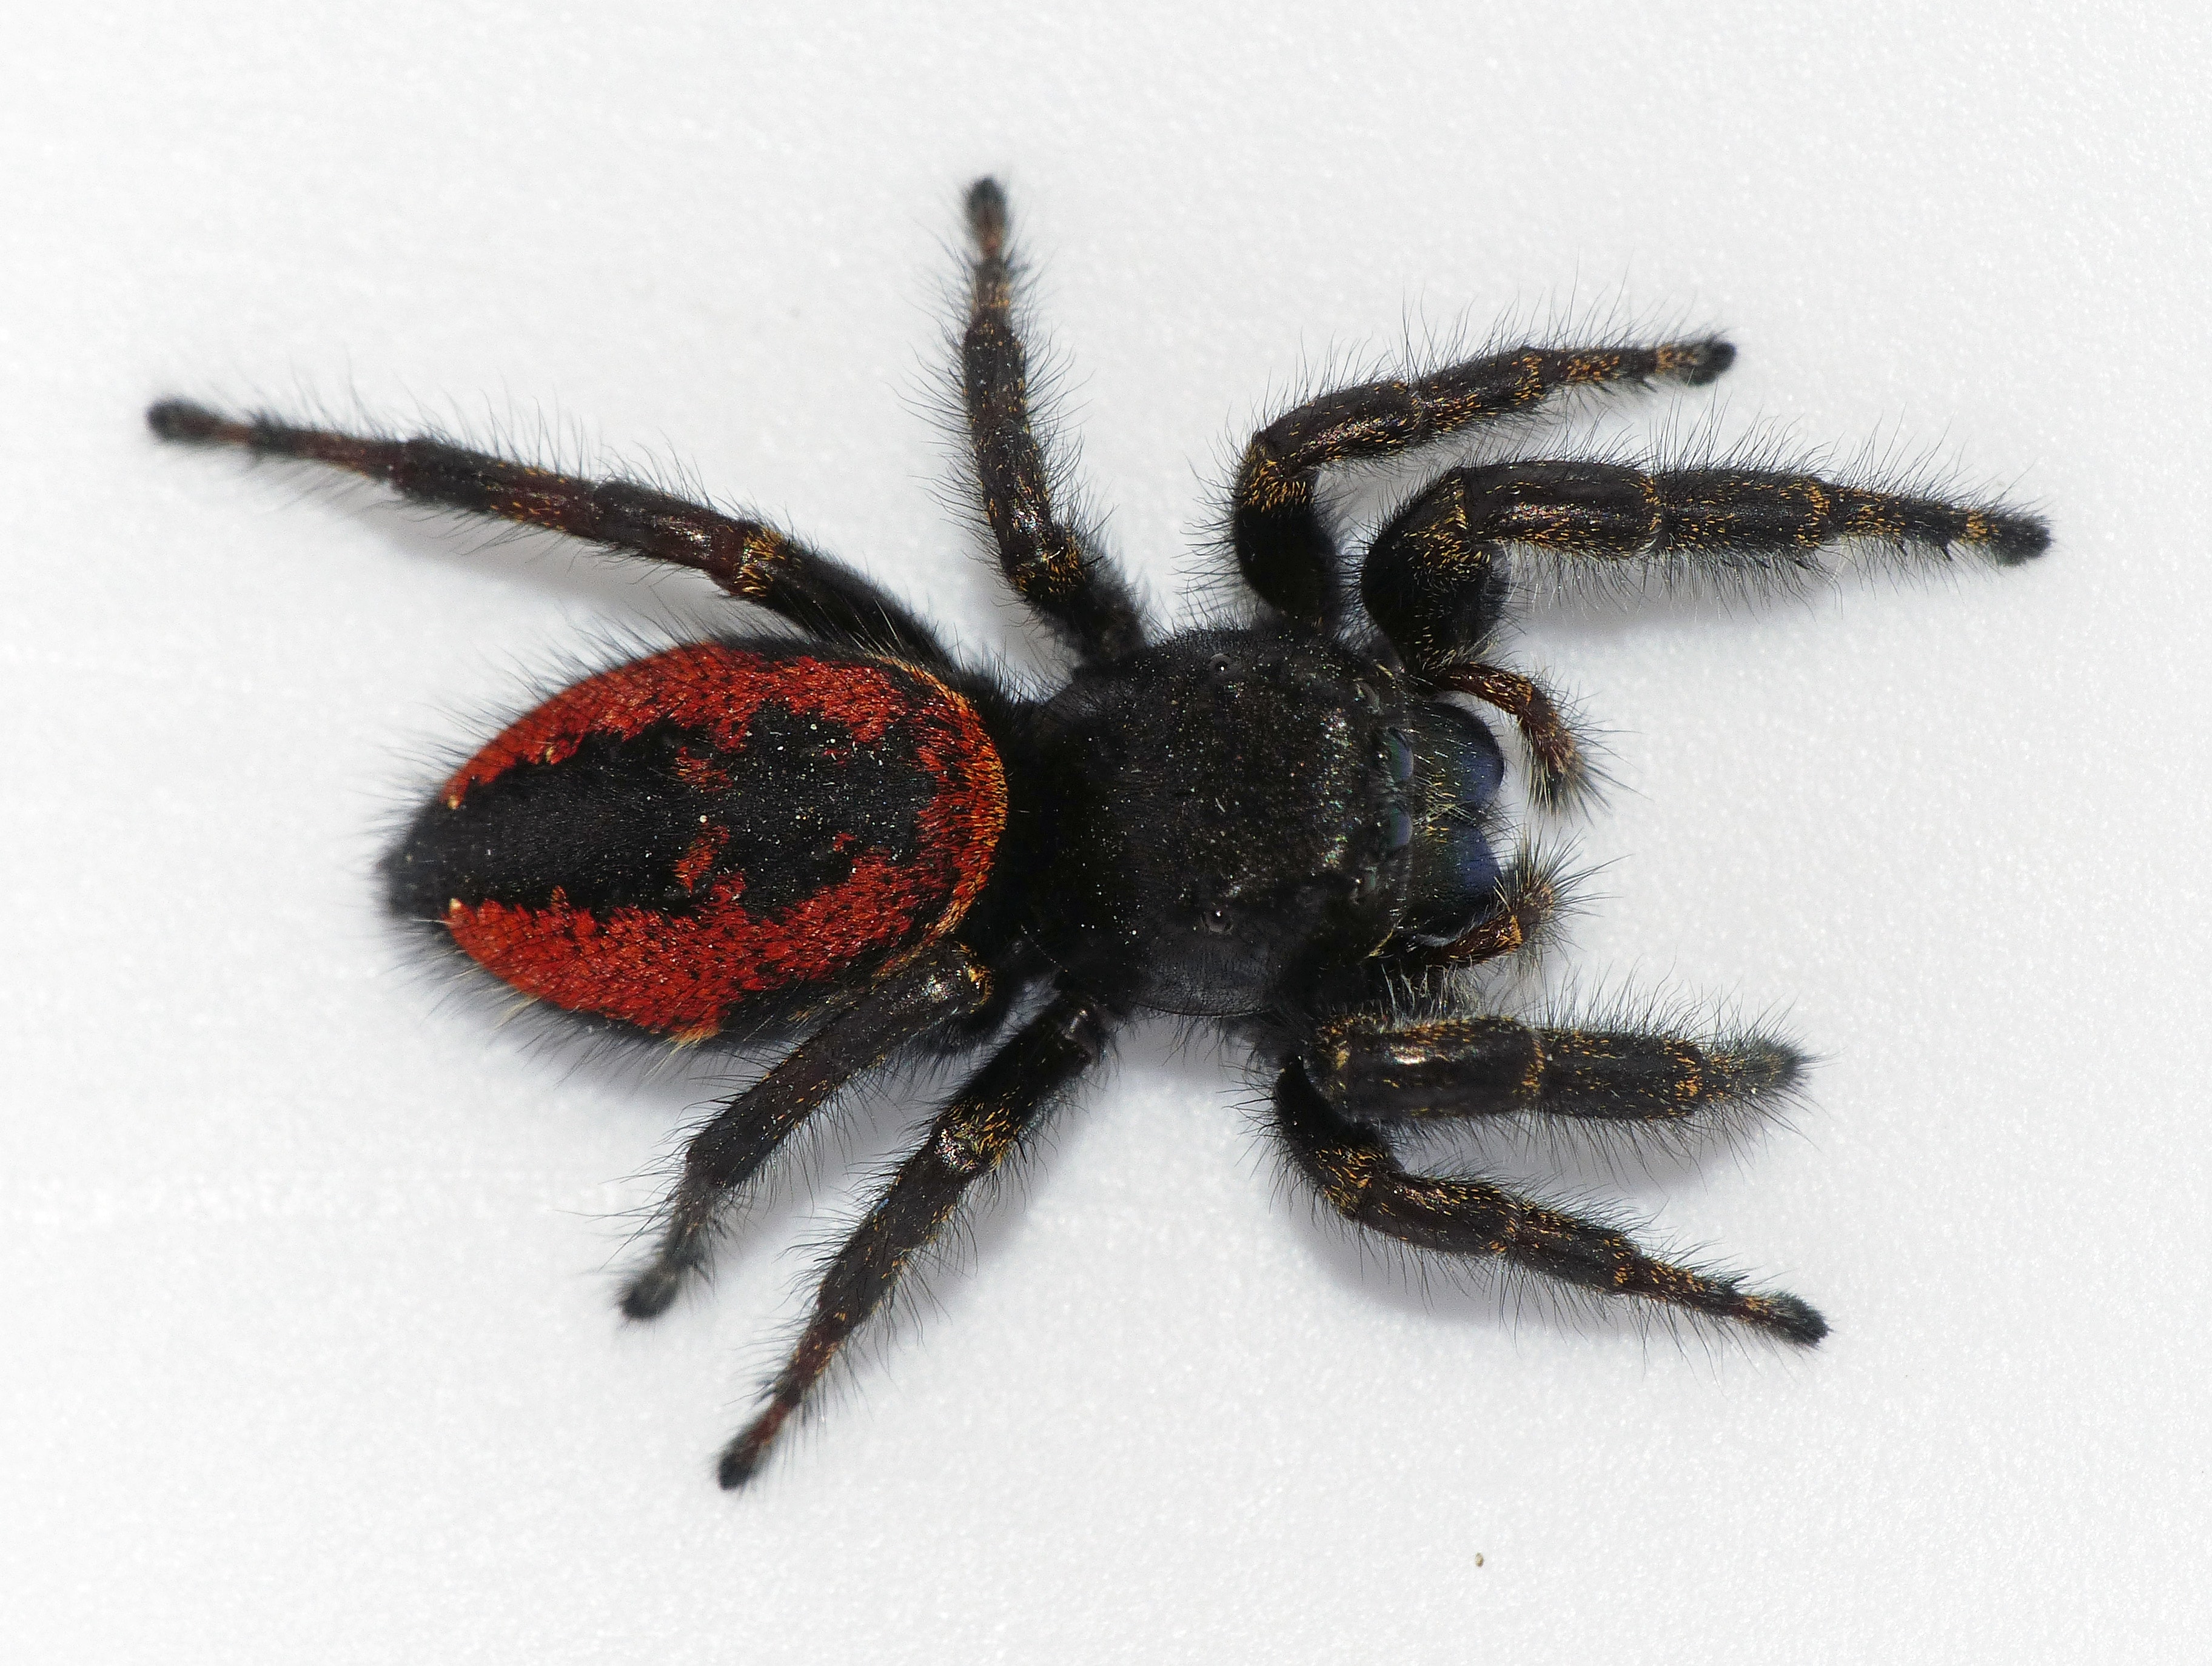 Picture of Phidippus johnsoni (Johnson Jumping Spider) - Female - Dorsal